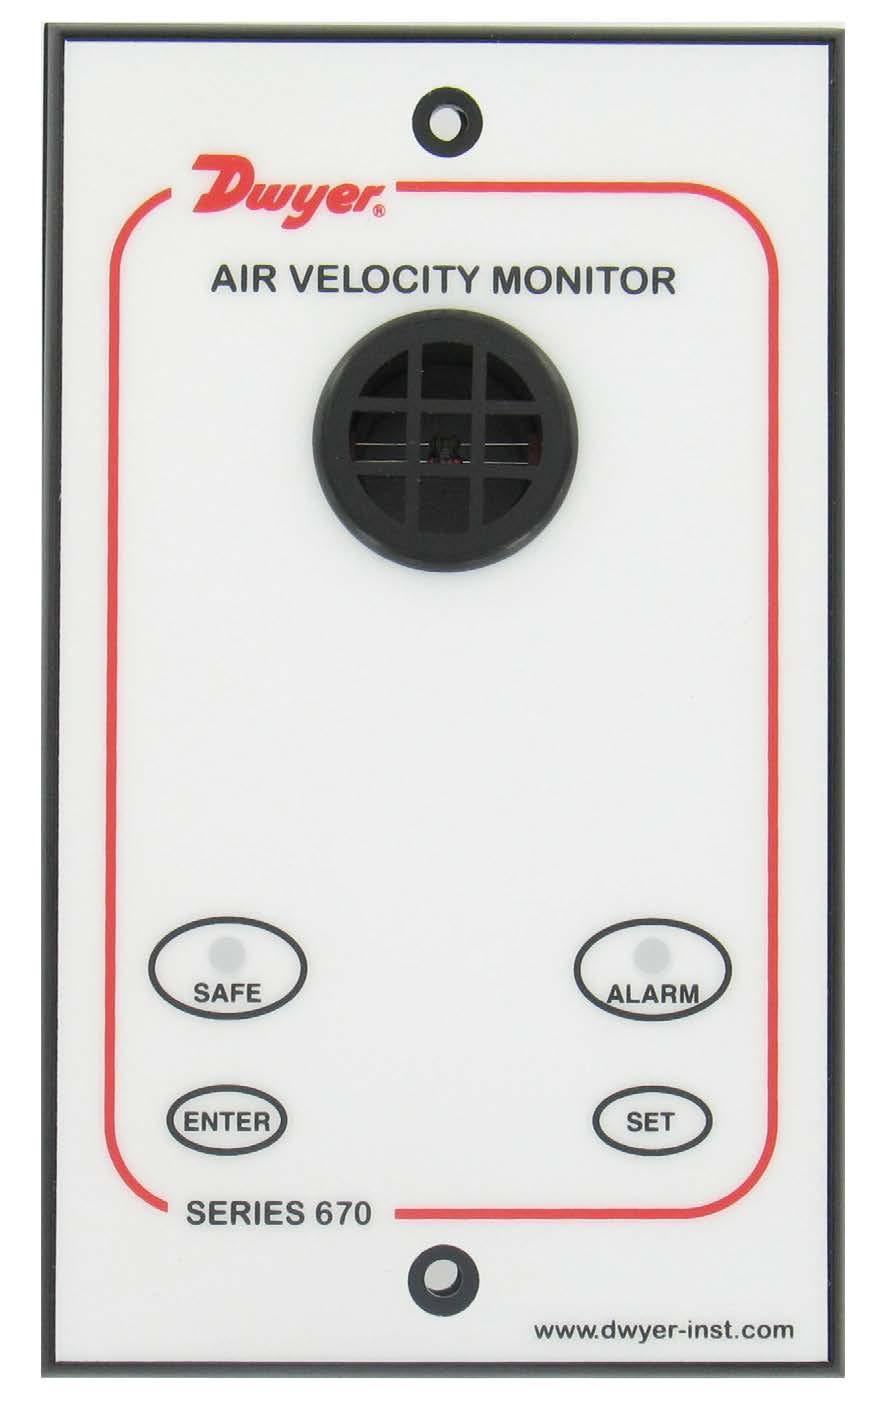 Bulletin AV-670 Series 670 Hood Monitor Specifications - Installation and Operating Instructions DWYER INSTRUMENTS, INC. P.O. BOX 373 MICHIGAN CITY, INDIANA 46360, U.